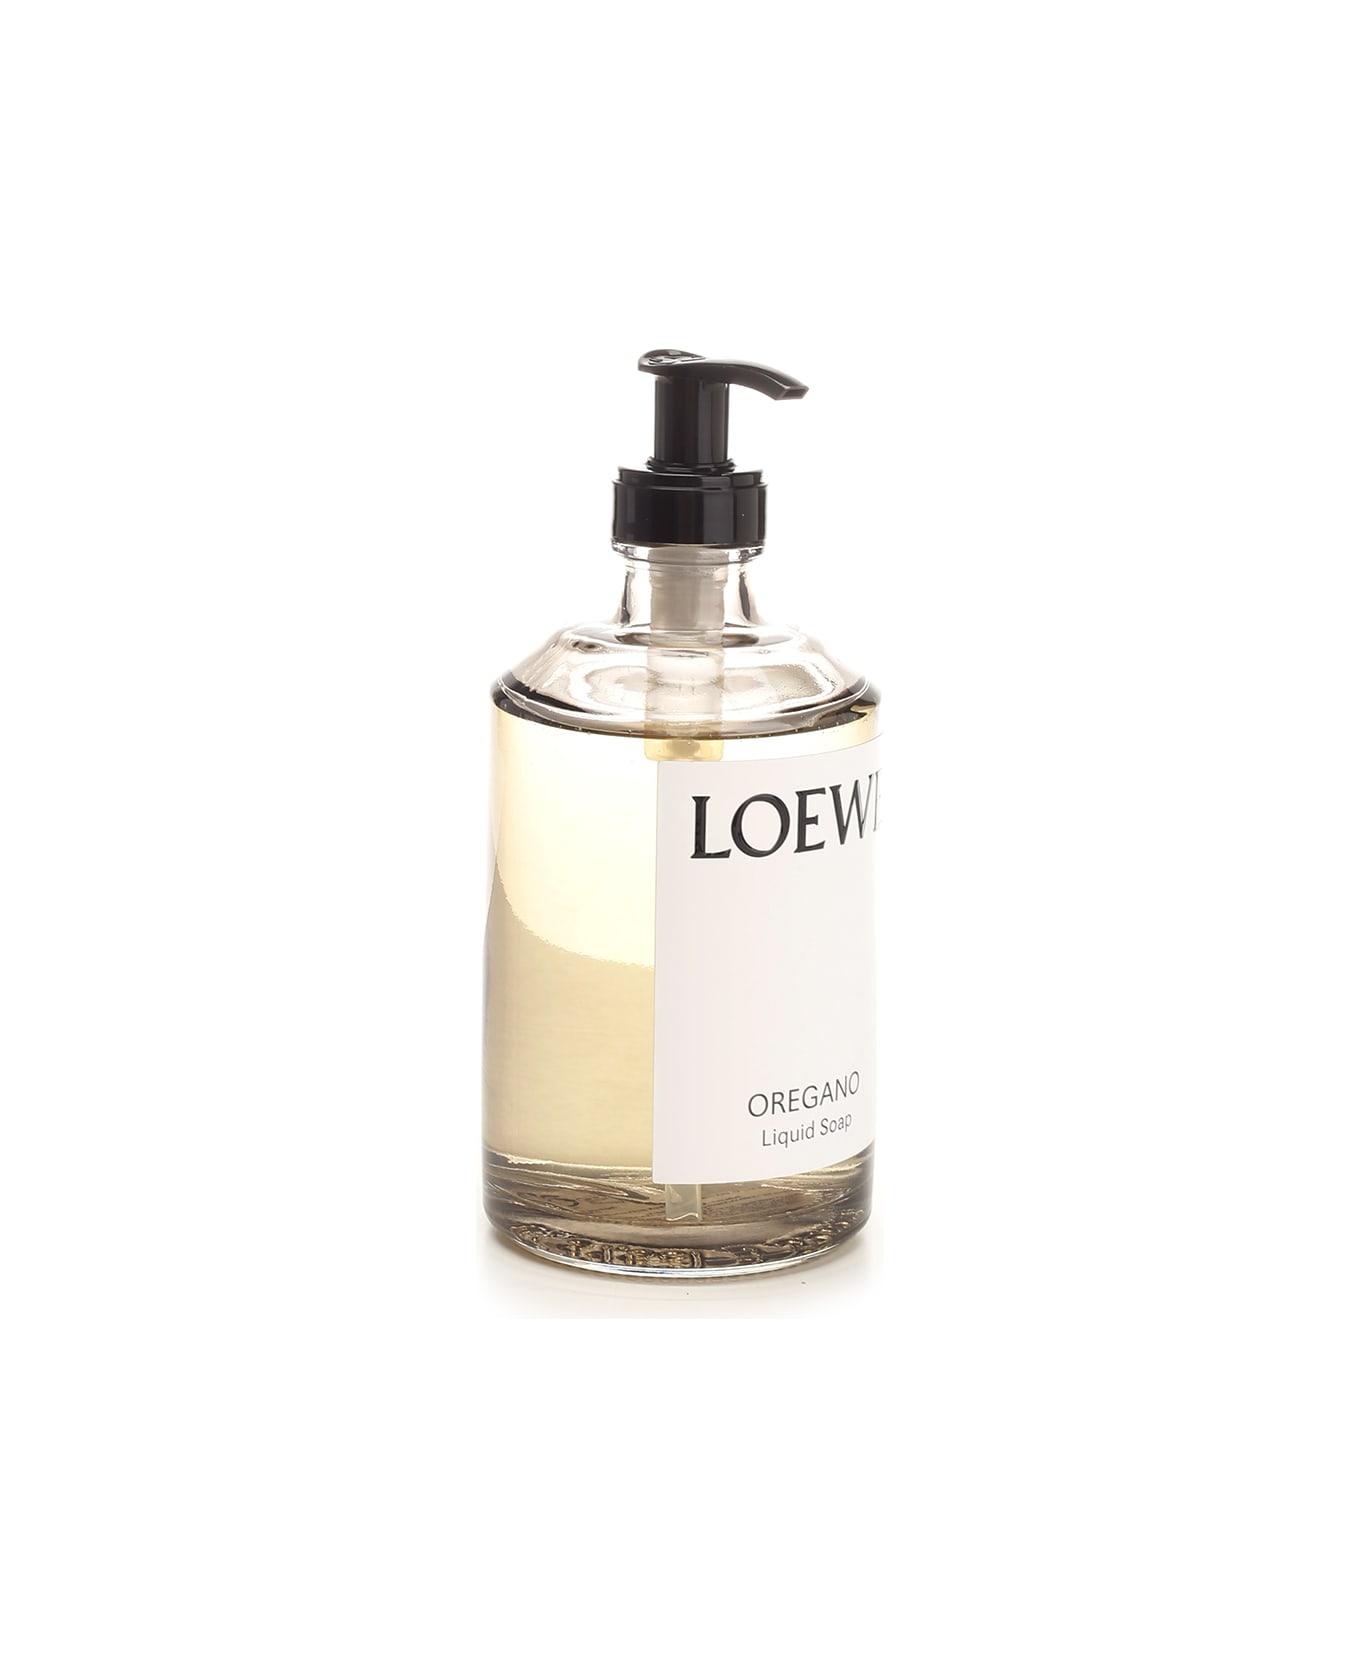 Loewe Liquid Soap With Oregano Essence - Green